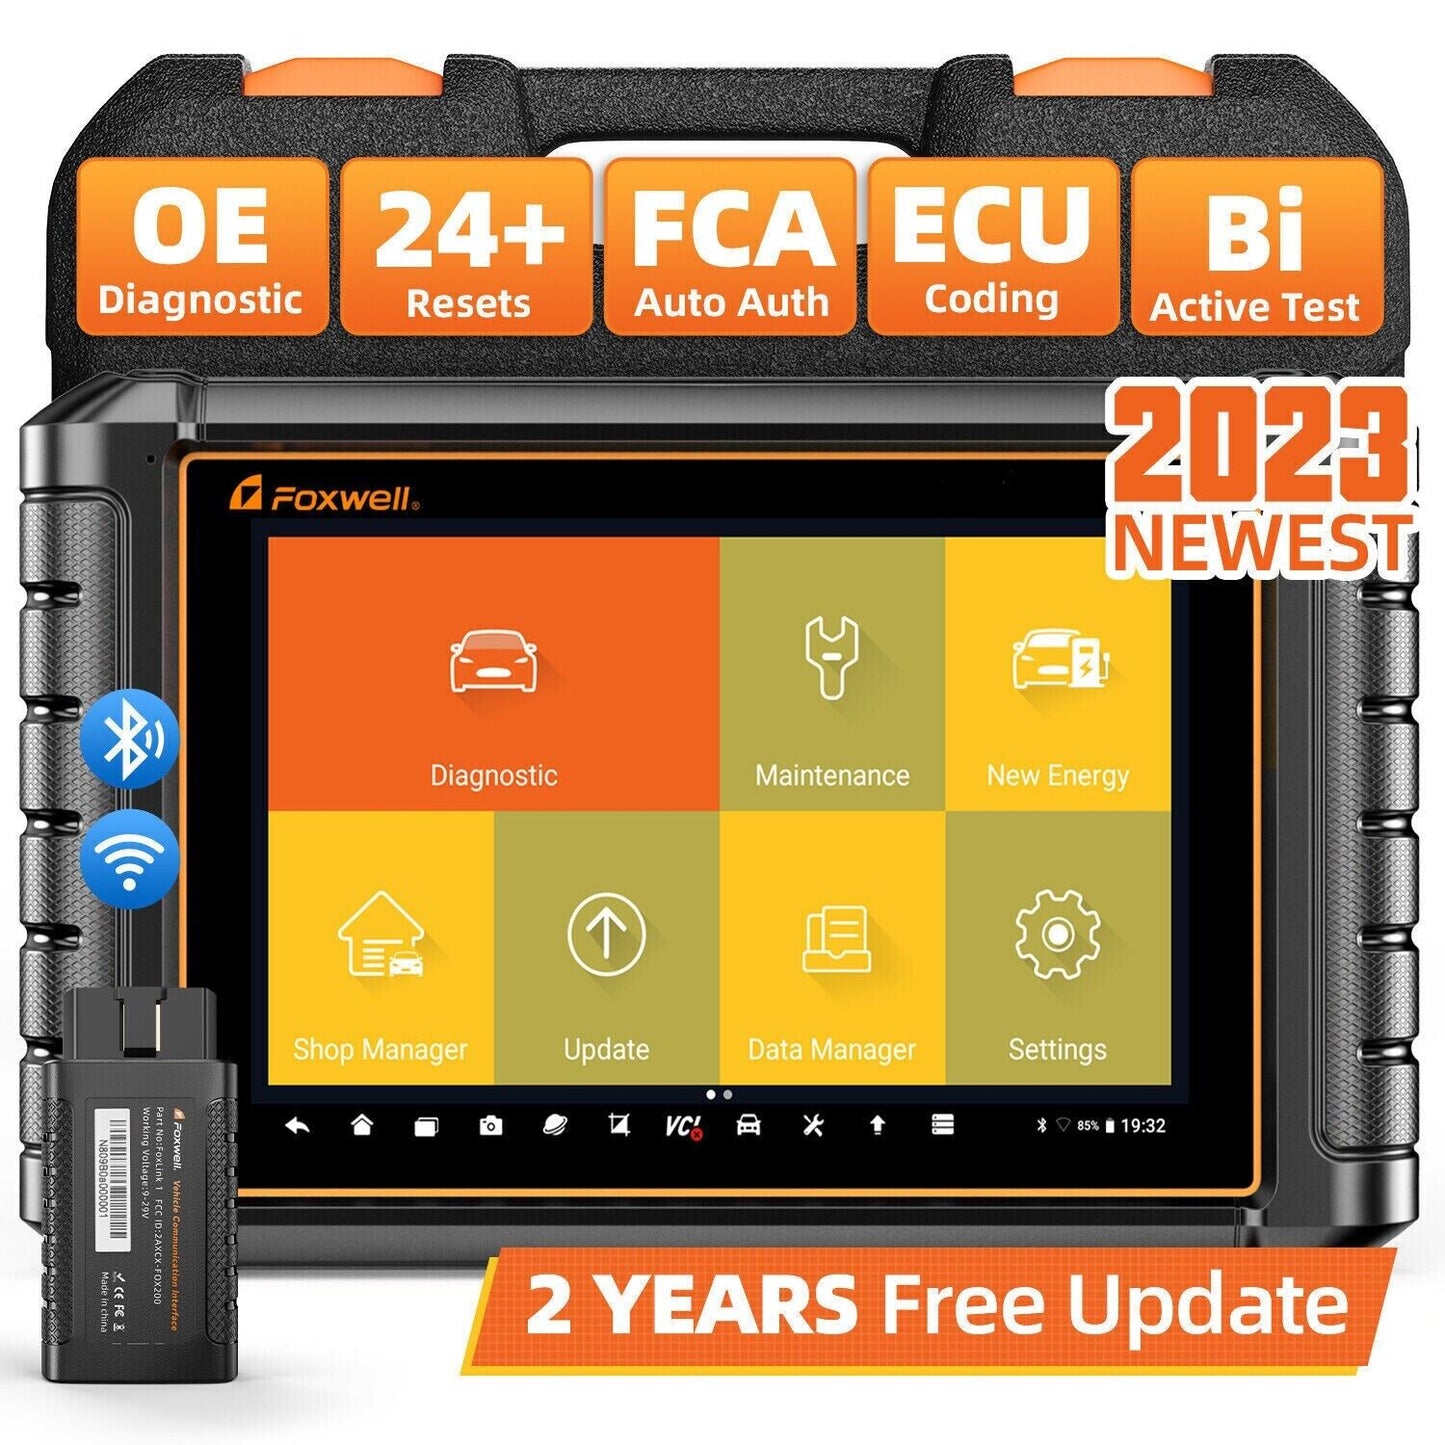 Foxwell NT909 Pro-Garage Business Car Van Diagnostic Tablet Fejlkode Scan Tool